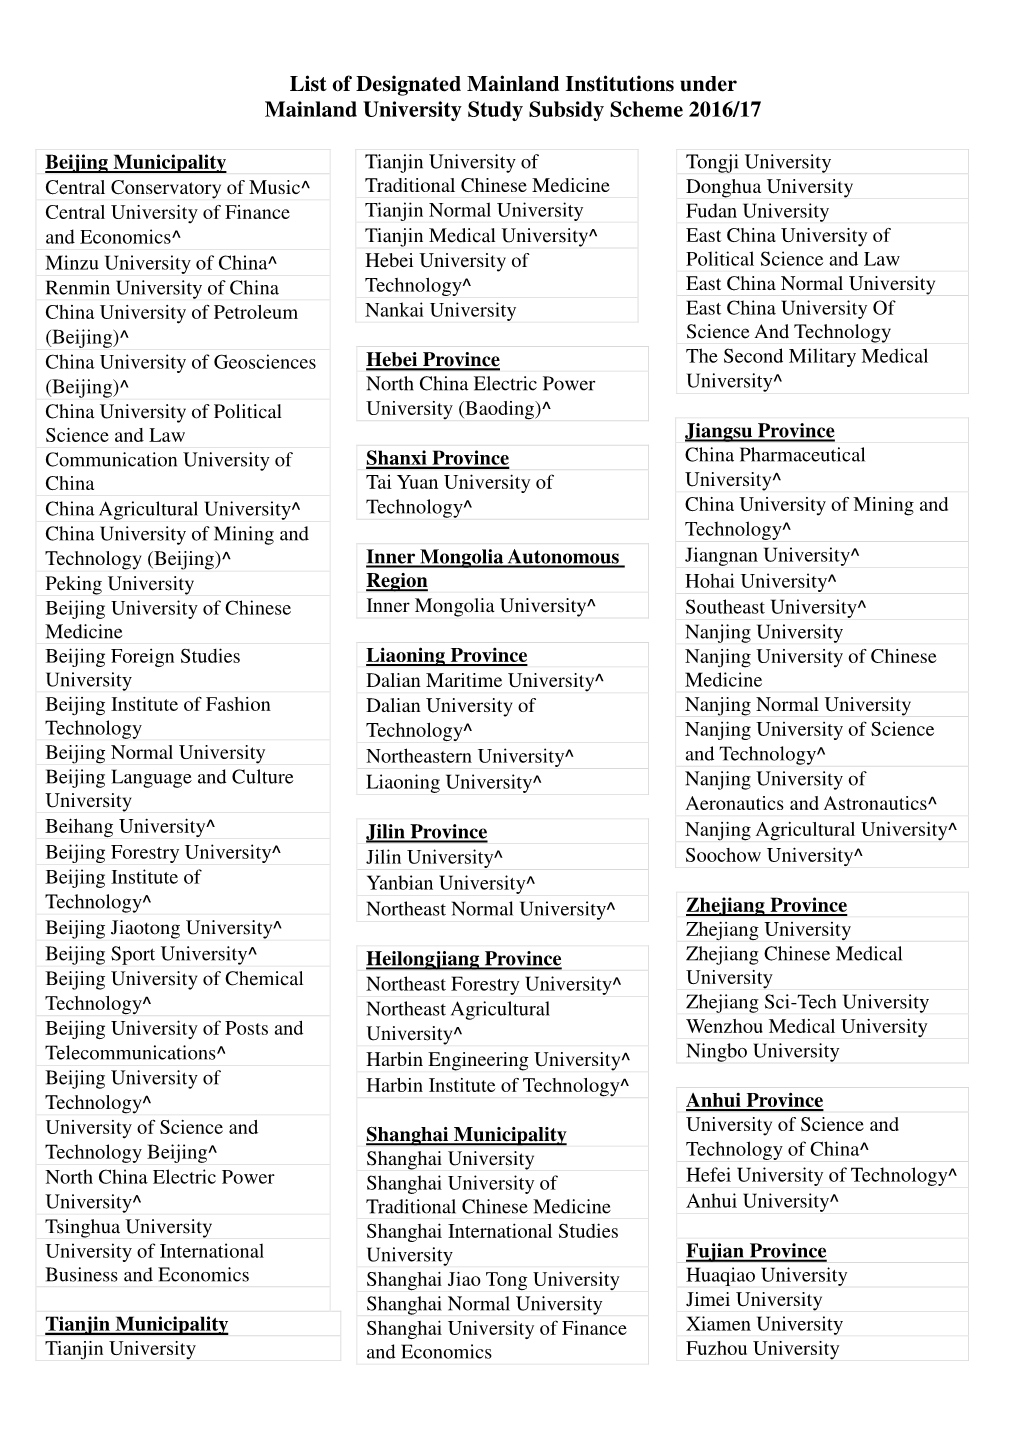 List of Designated Mainland Institutions Under Mainland University Study Subsidy Scheme 2016/17